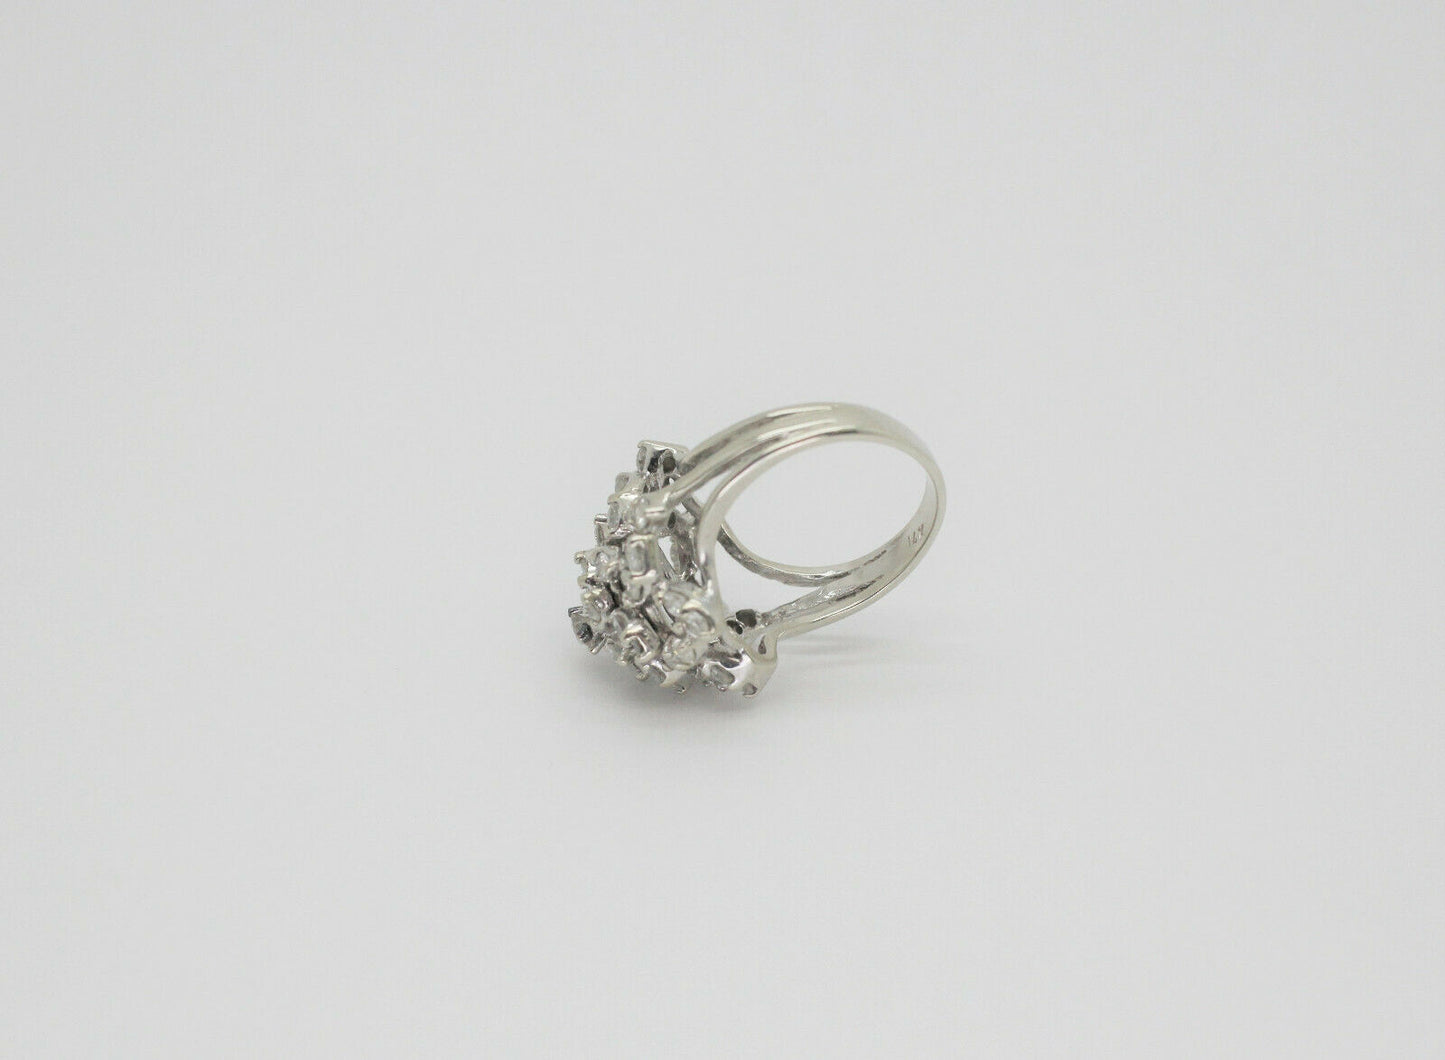 Vintage 14k White Gold Ladies Diamond Cocktail Ring, Size 6.5 - 7.3g